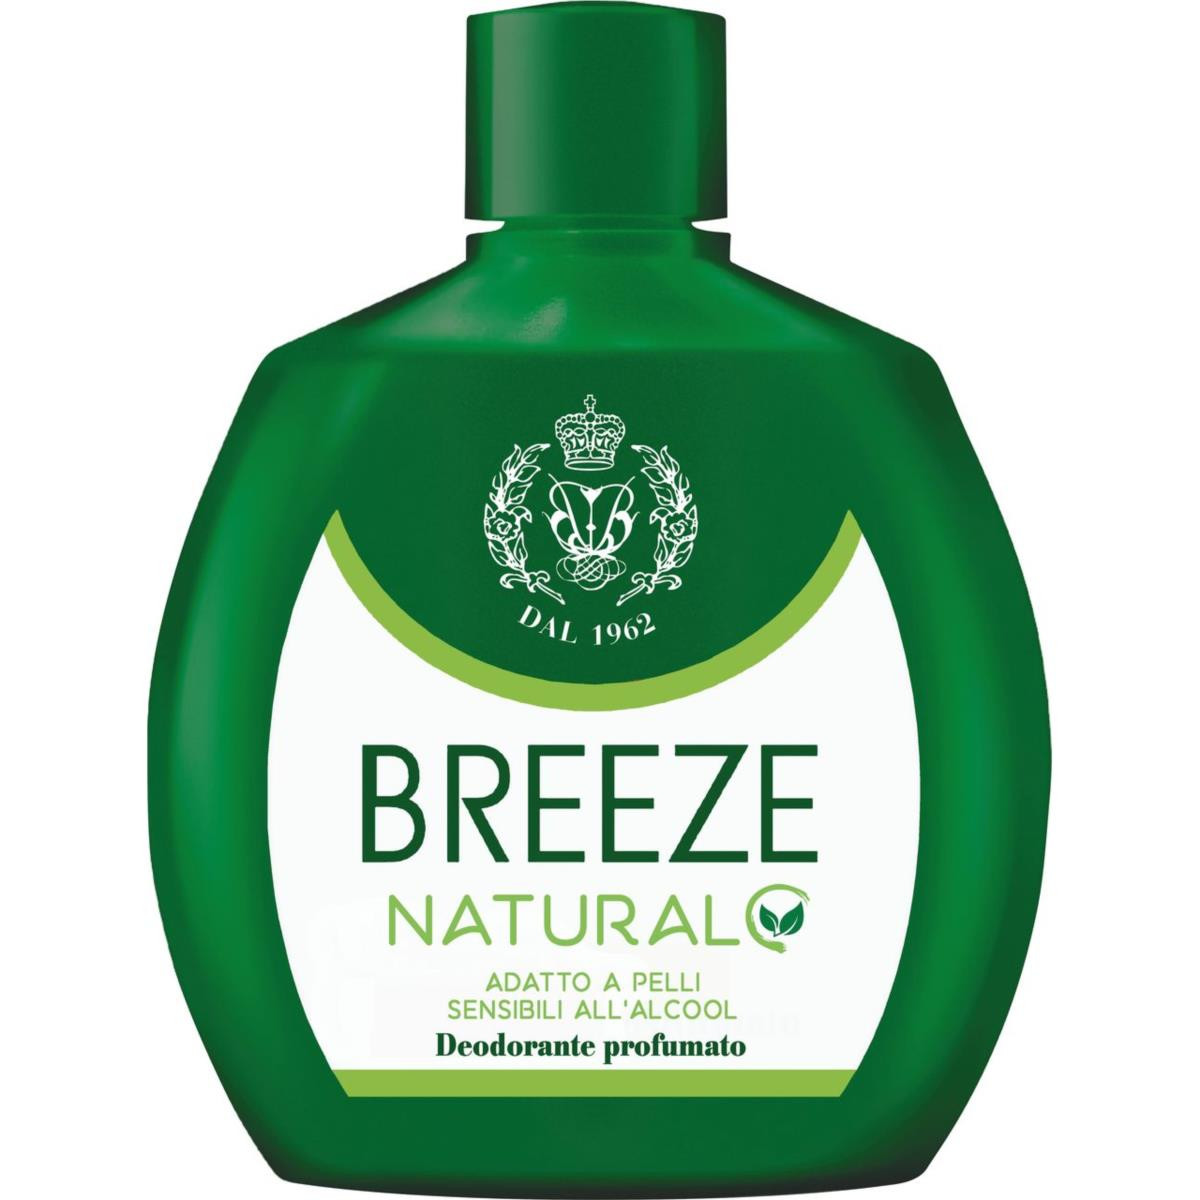 Breeze Natural essence Deodorante profumato 100 ml